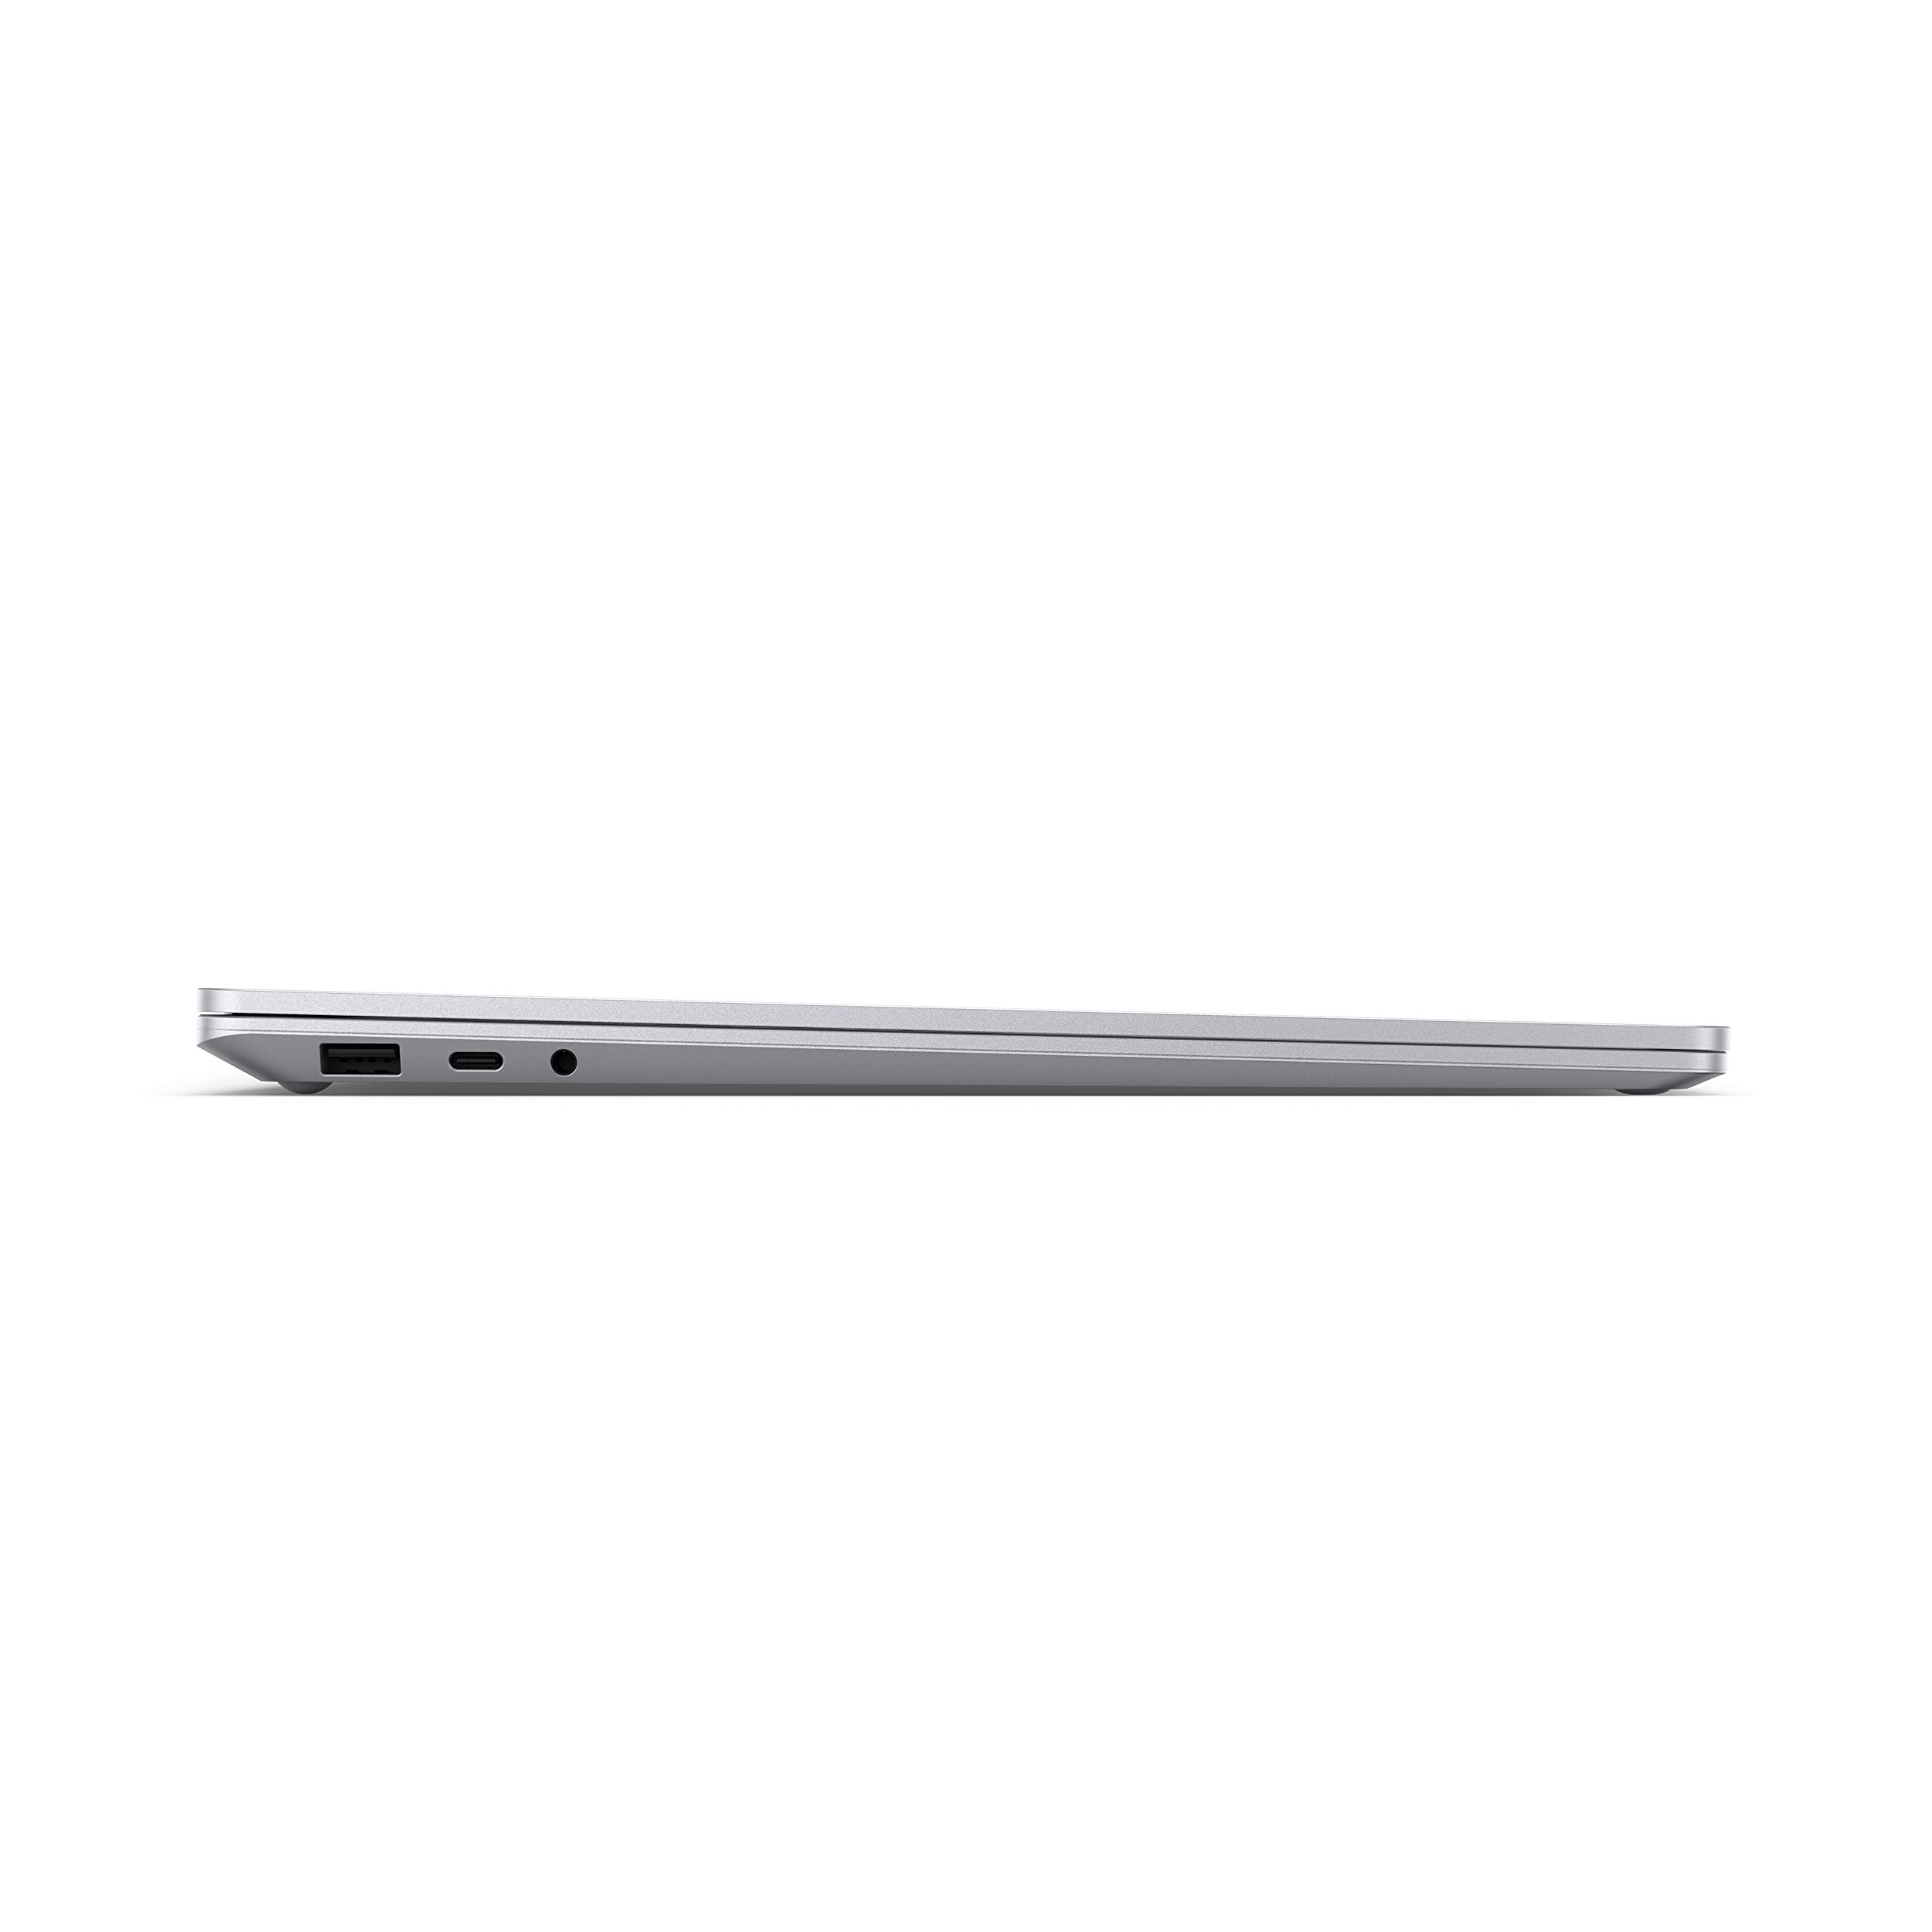 Microsoft Surface Laptop 4 Super-Thin 15 Inch Touchscreen Laptop (Platinum) AMD Ryzen 7 with Radeon Graphics (Microsoft Surface Edition) 8 GB RAM, 256 GB SSD, Win10 Home, 2021 Model